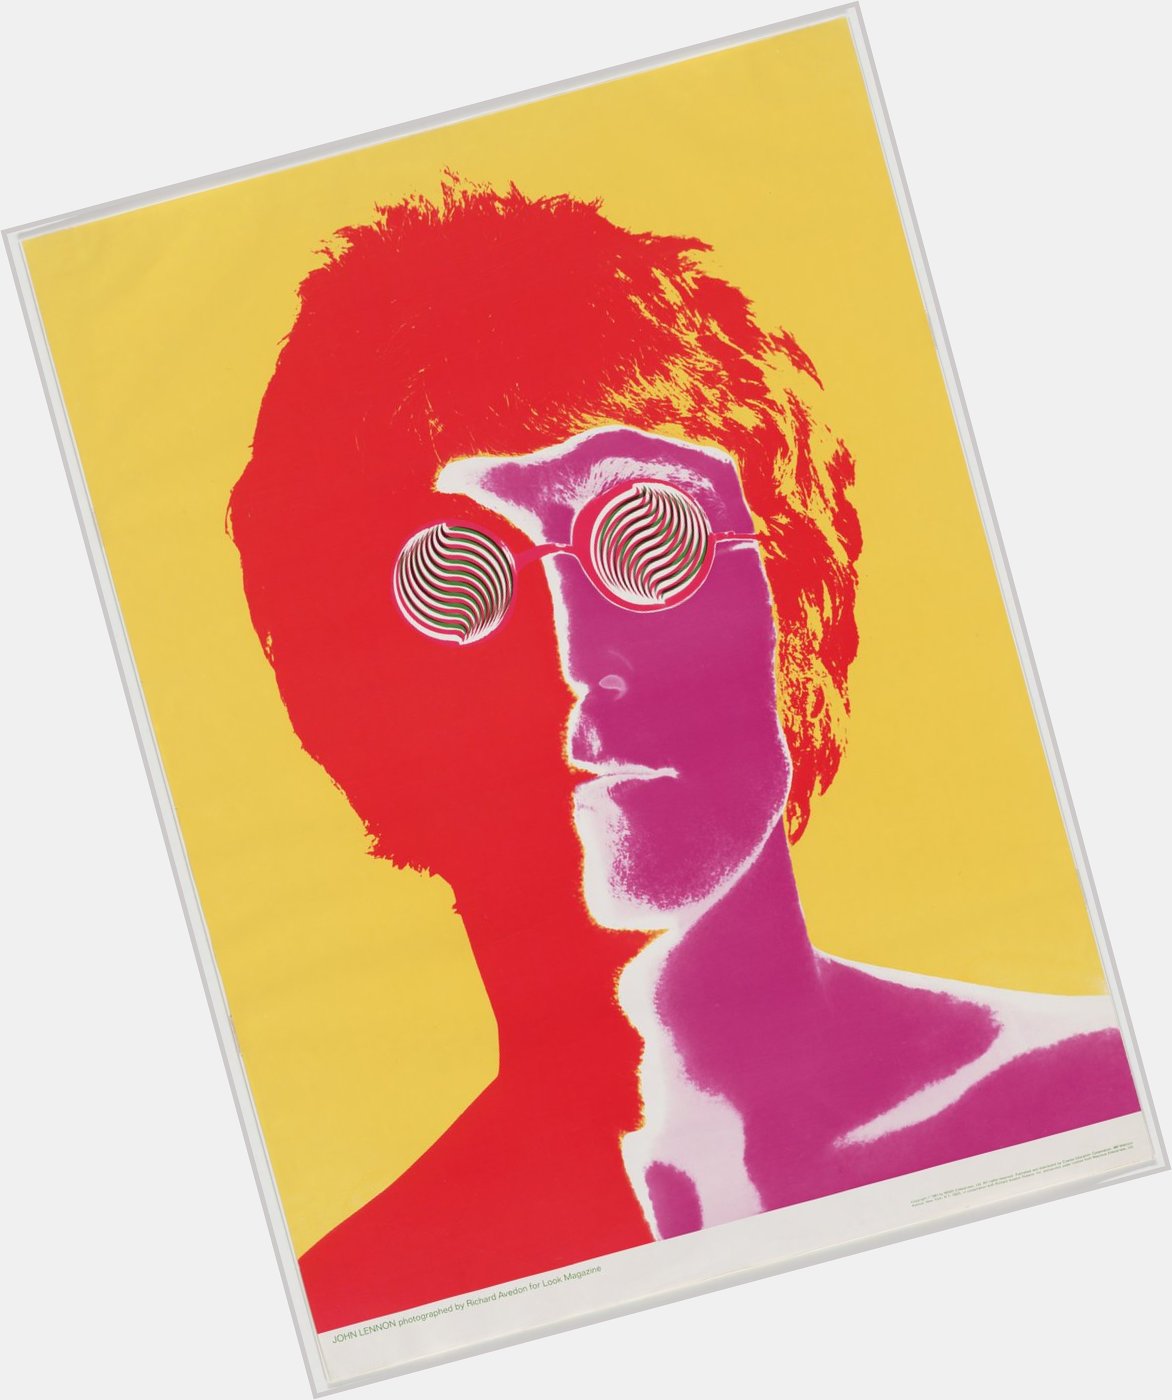 Happy birthday, John Lennon  Richard Avedon, 1967 © 2020 Foundation 